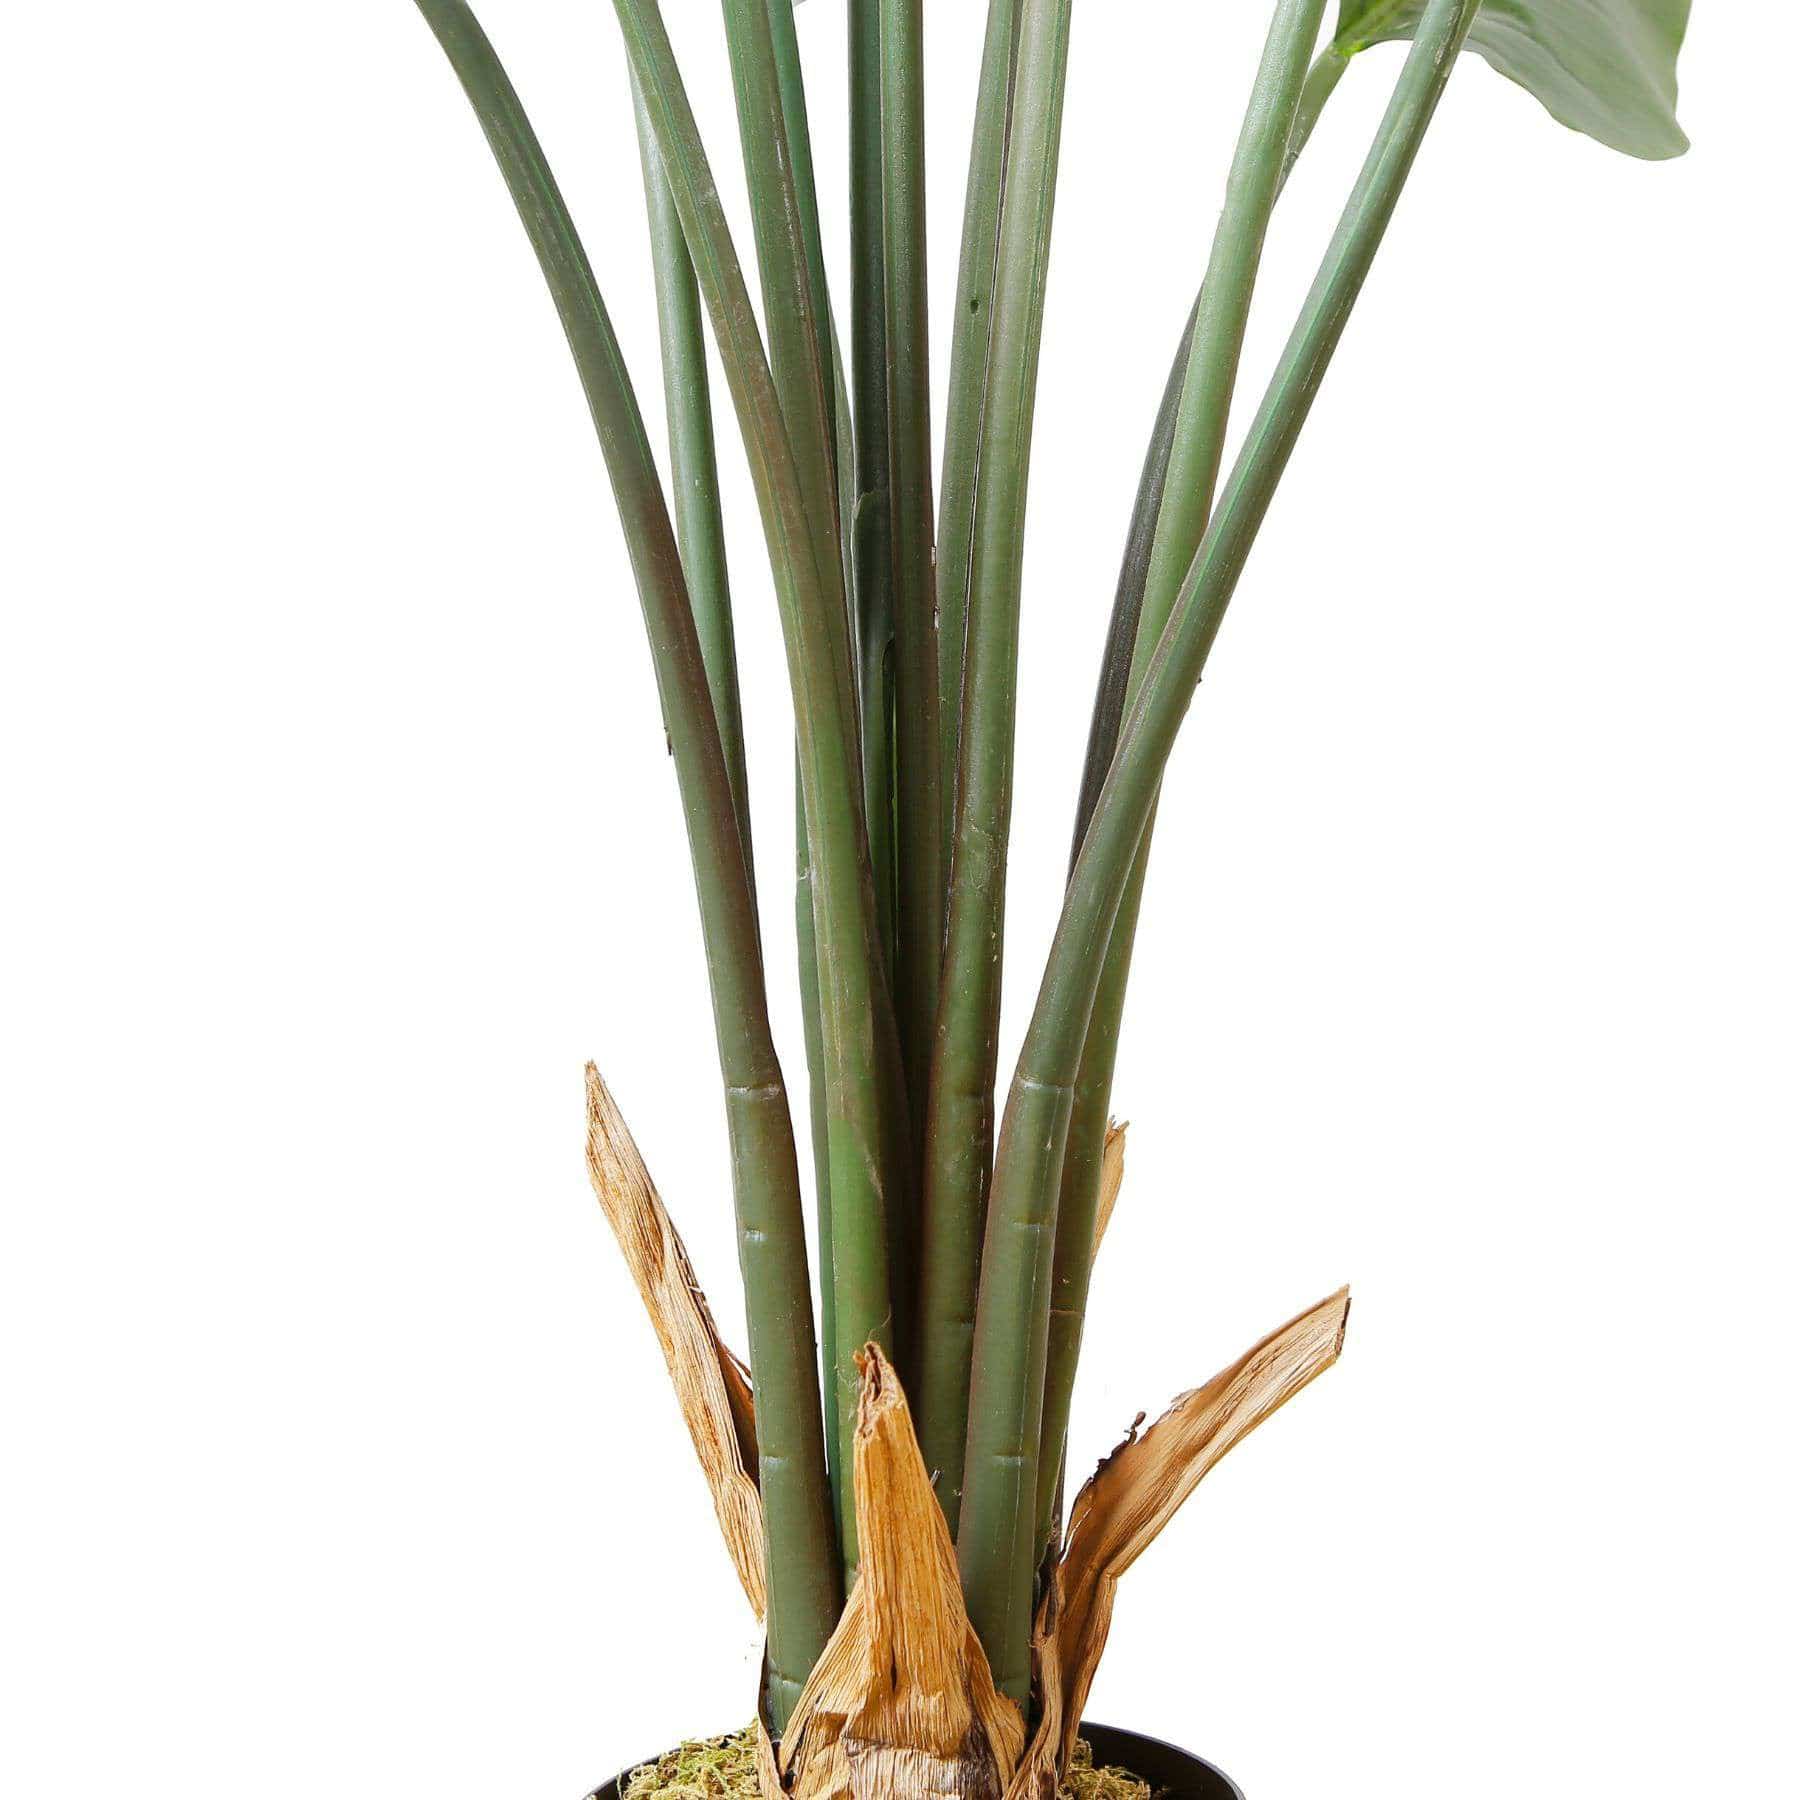 JAVI Artificial Spathiphyllum Leaf Potted Plant 51" ArtiPlanto